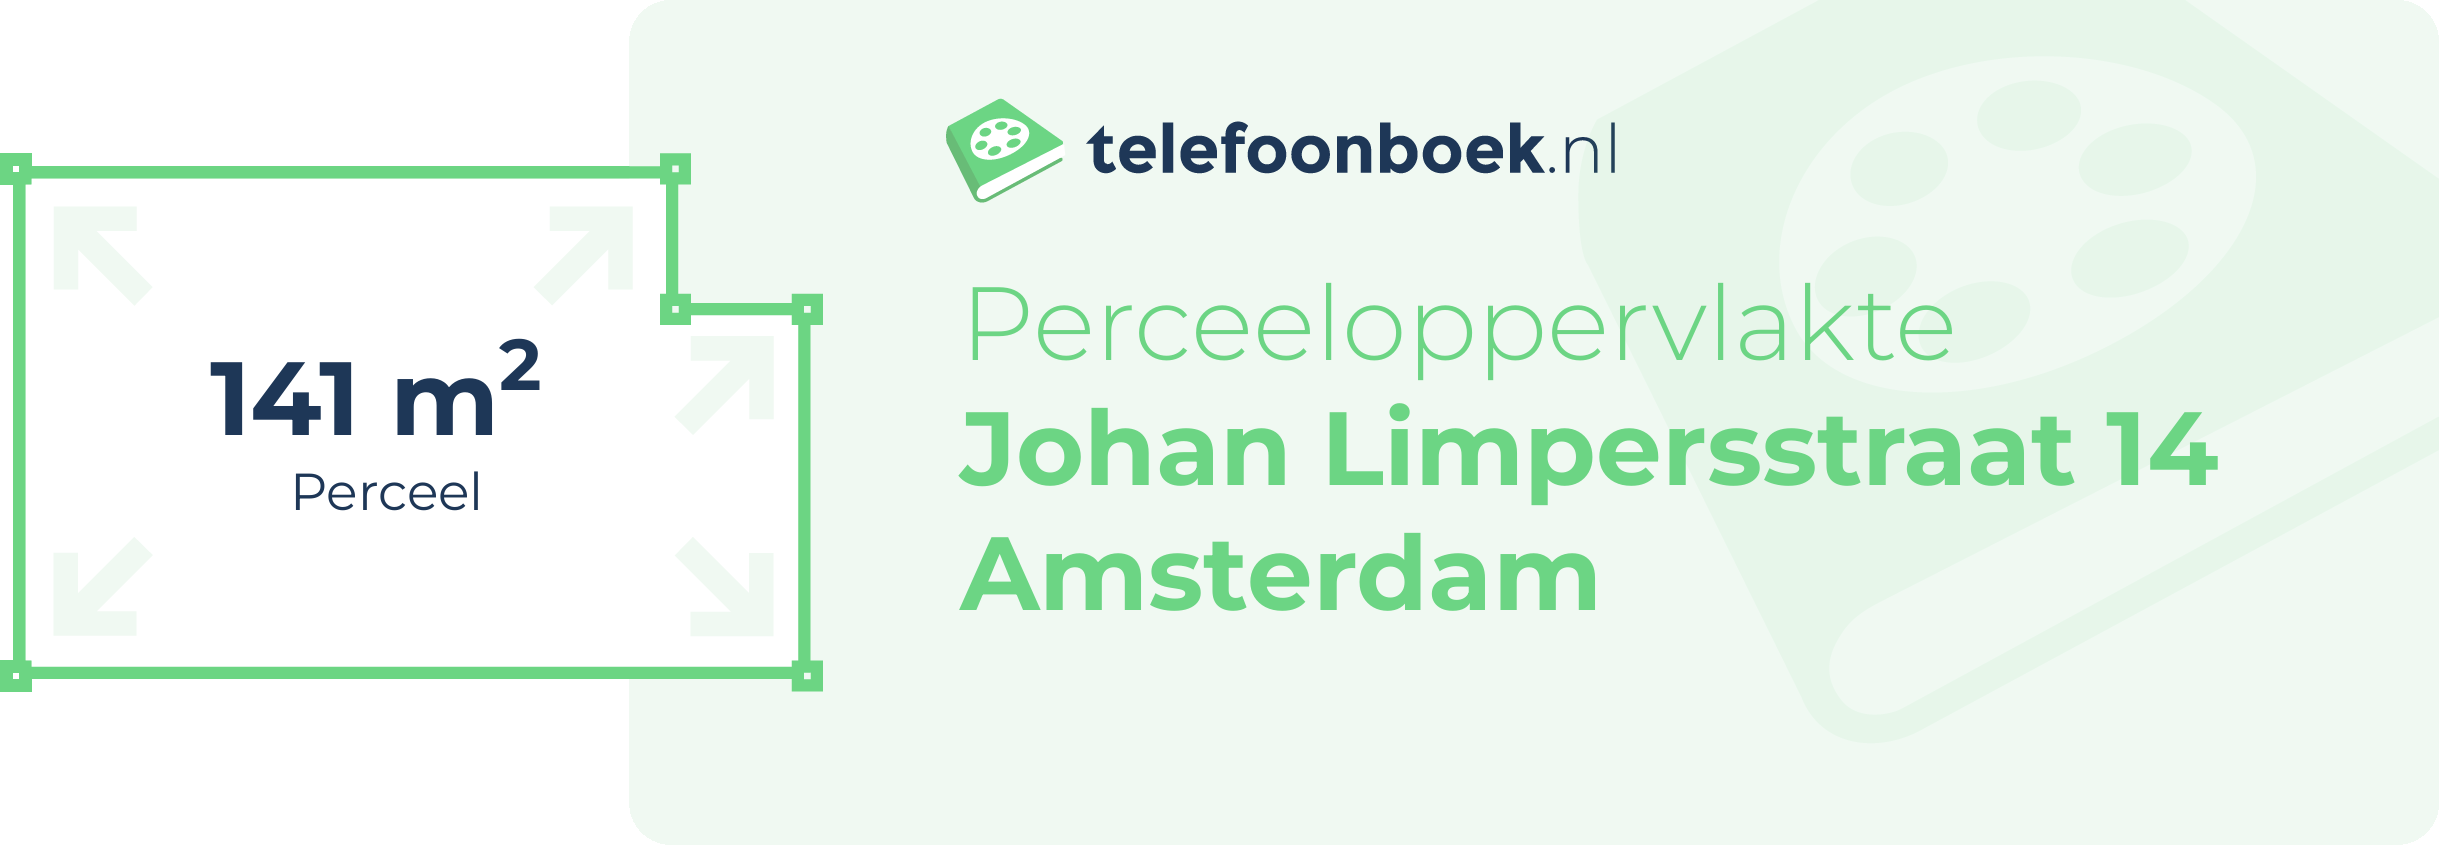 Perceeloppervlakte Johan Limpersstraat 14 Amsterdam